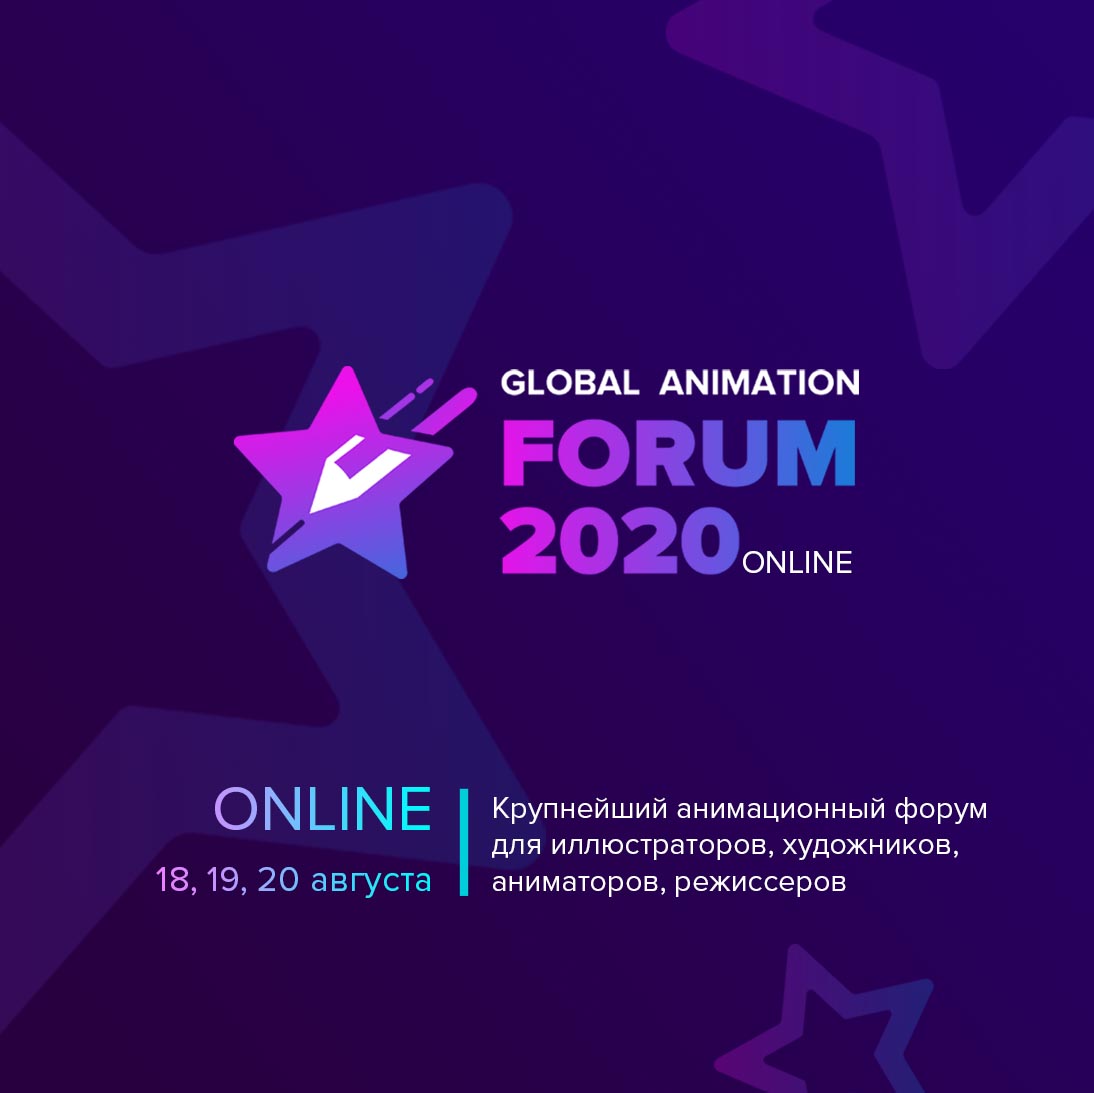 Global Animation Forum 2020